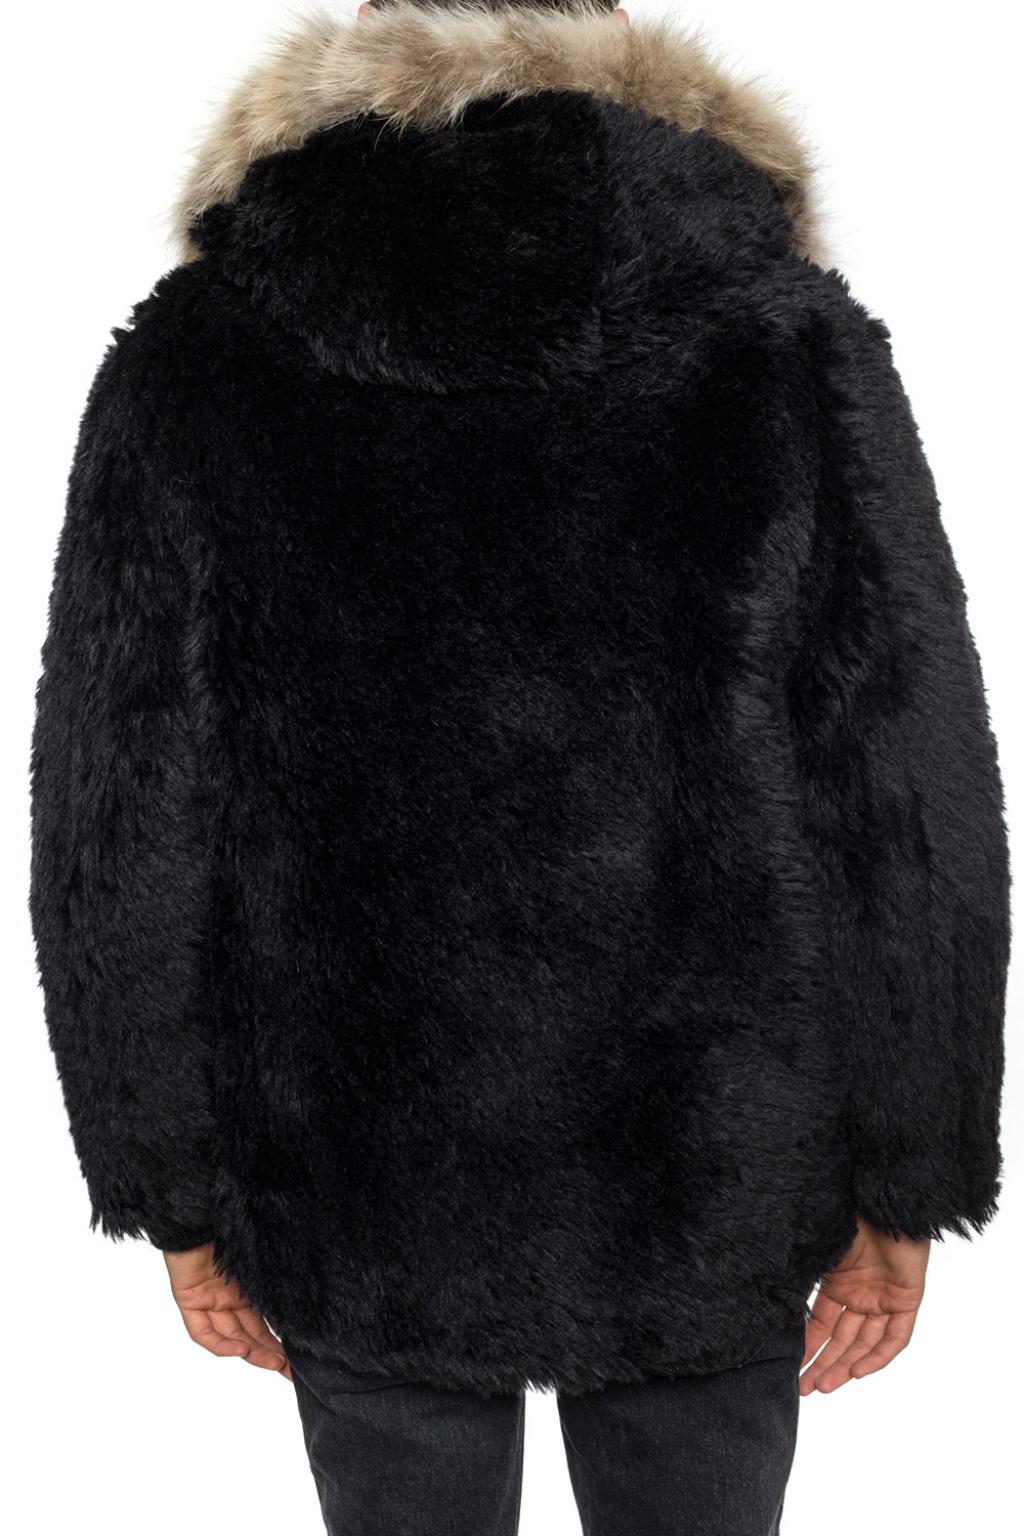 Saint Laurent Hooded fur coat | Men's Clothing | Vitkac